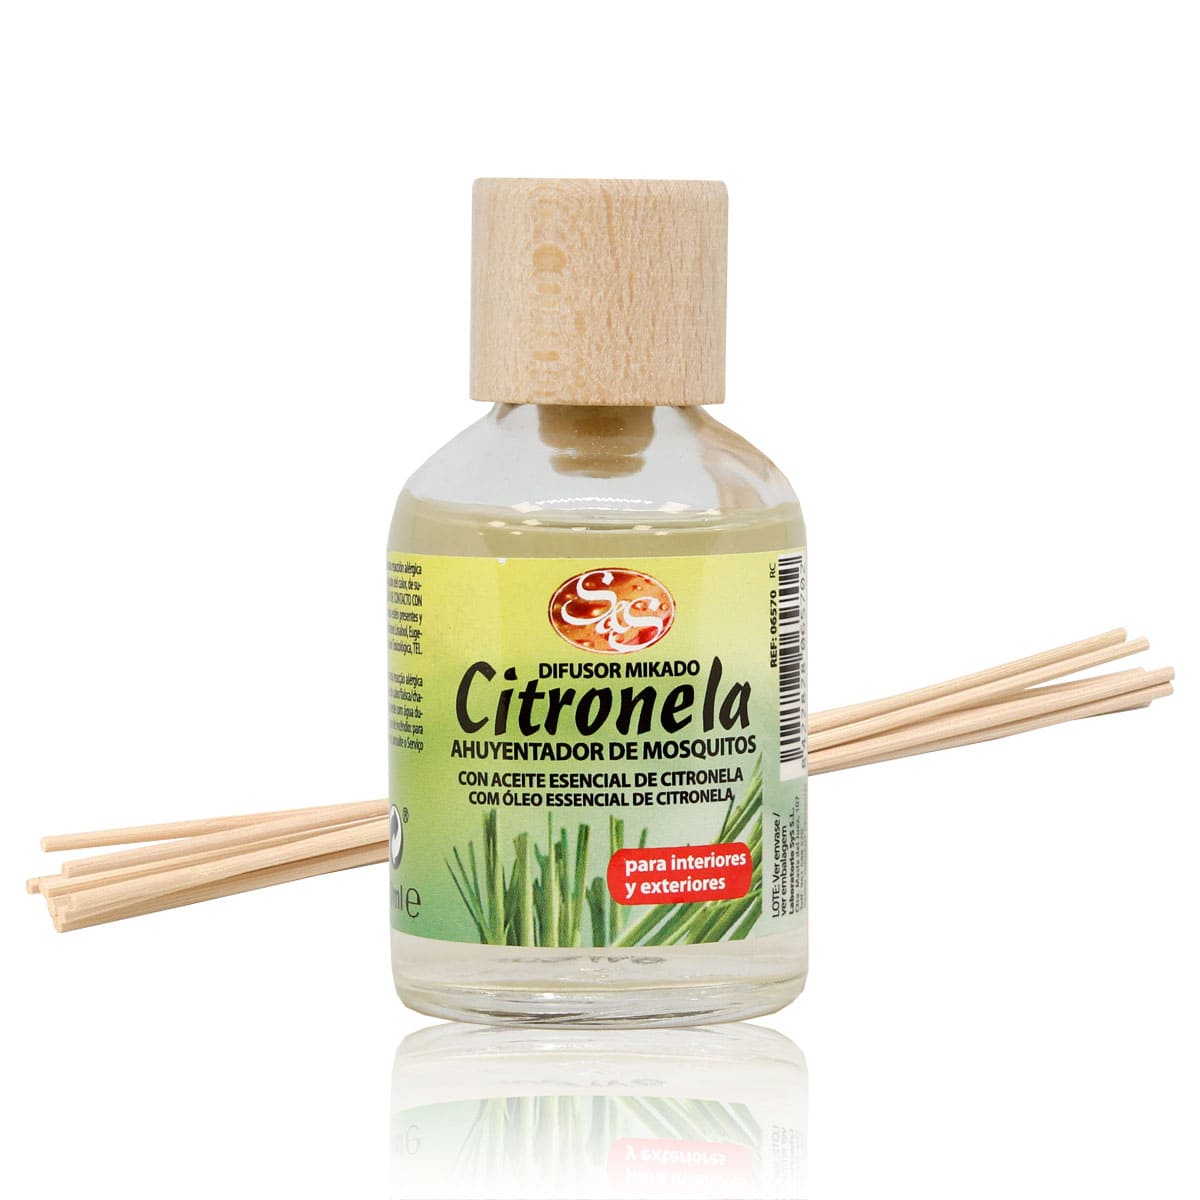 Buy Citronella Mikado air Freshener 50ml Marmol Collection SyS Aromas